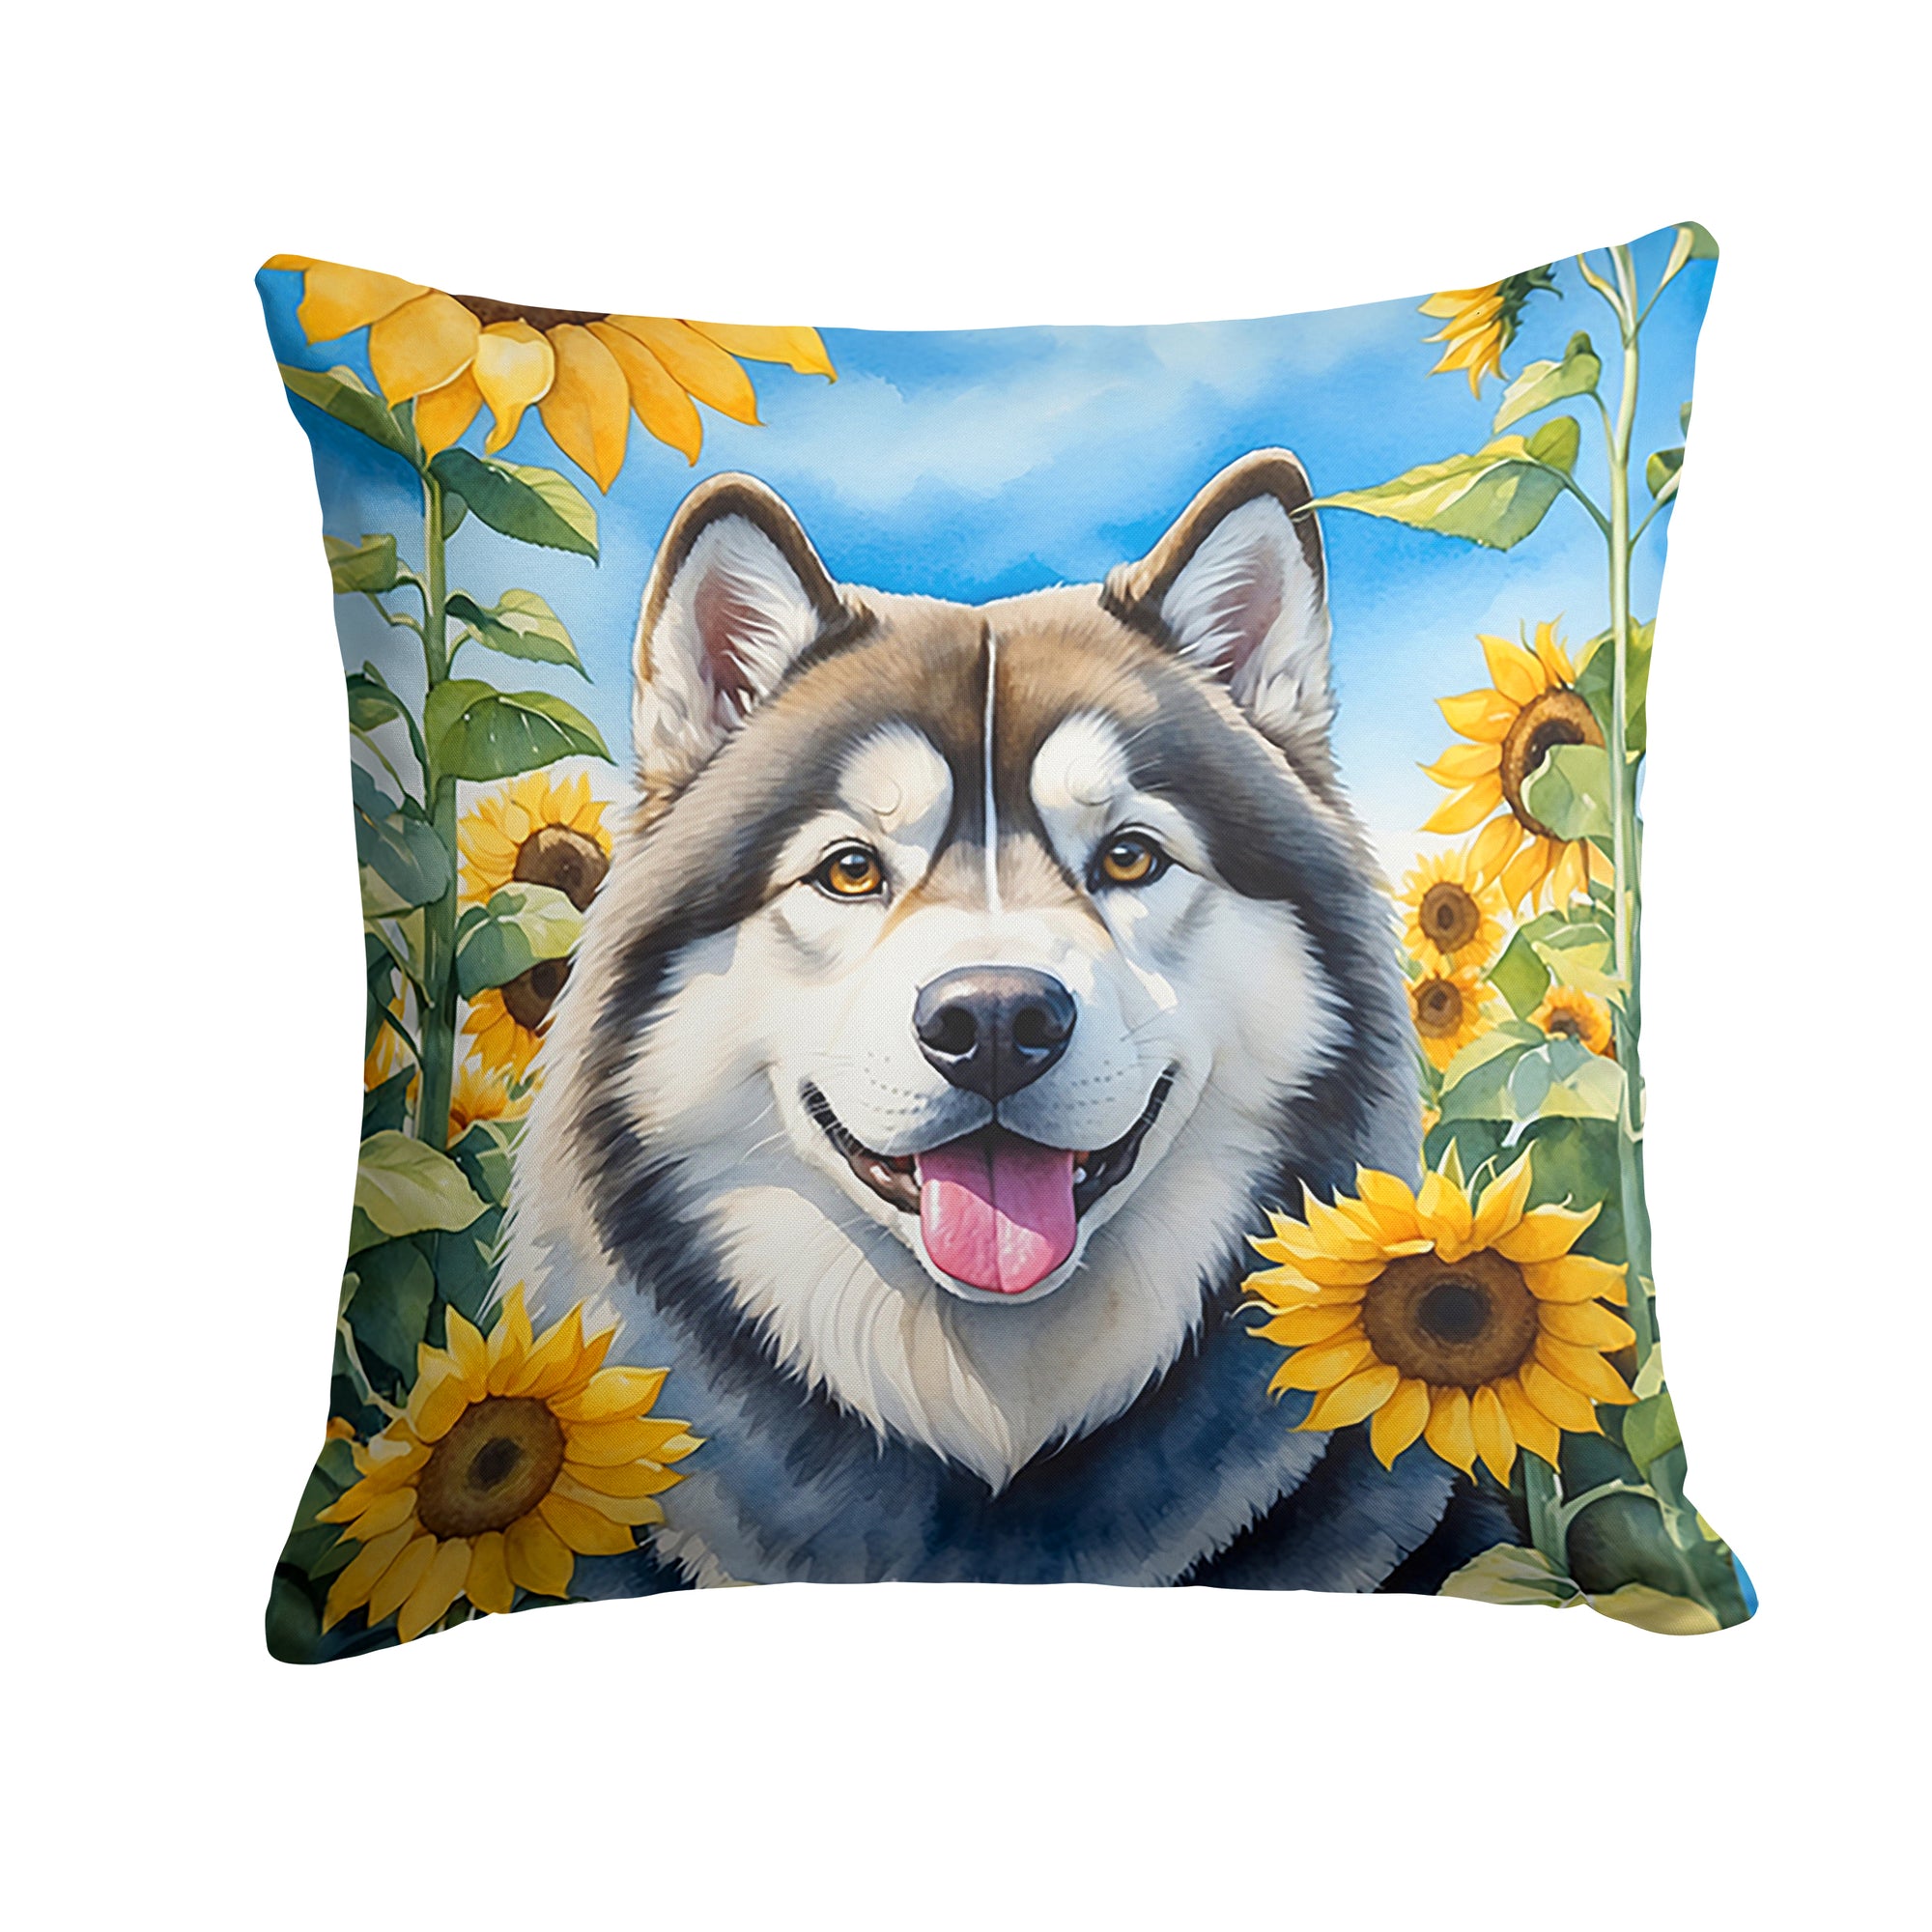 Buy this Alaskan Malamute in Sunflowers Throw Pillow